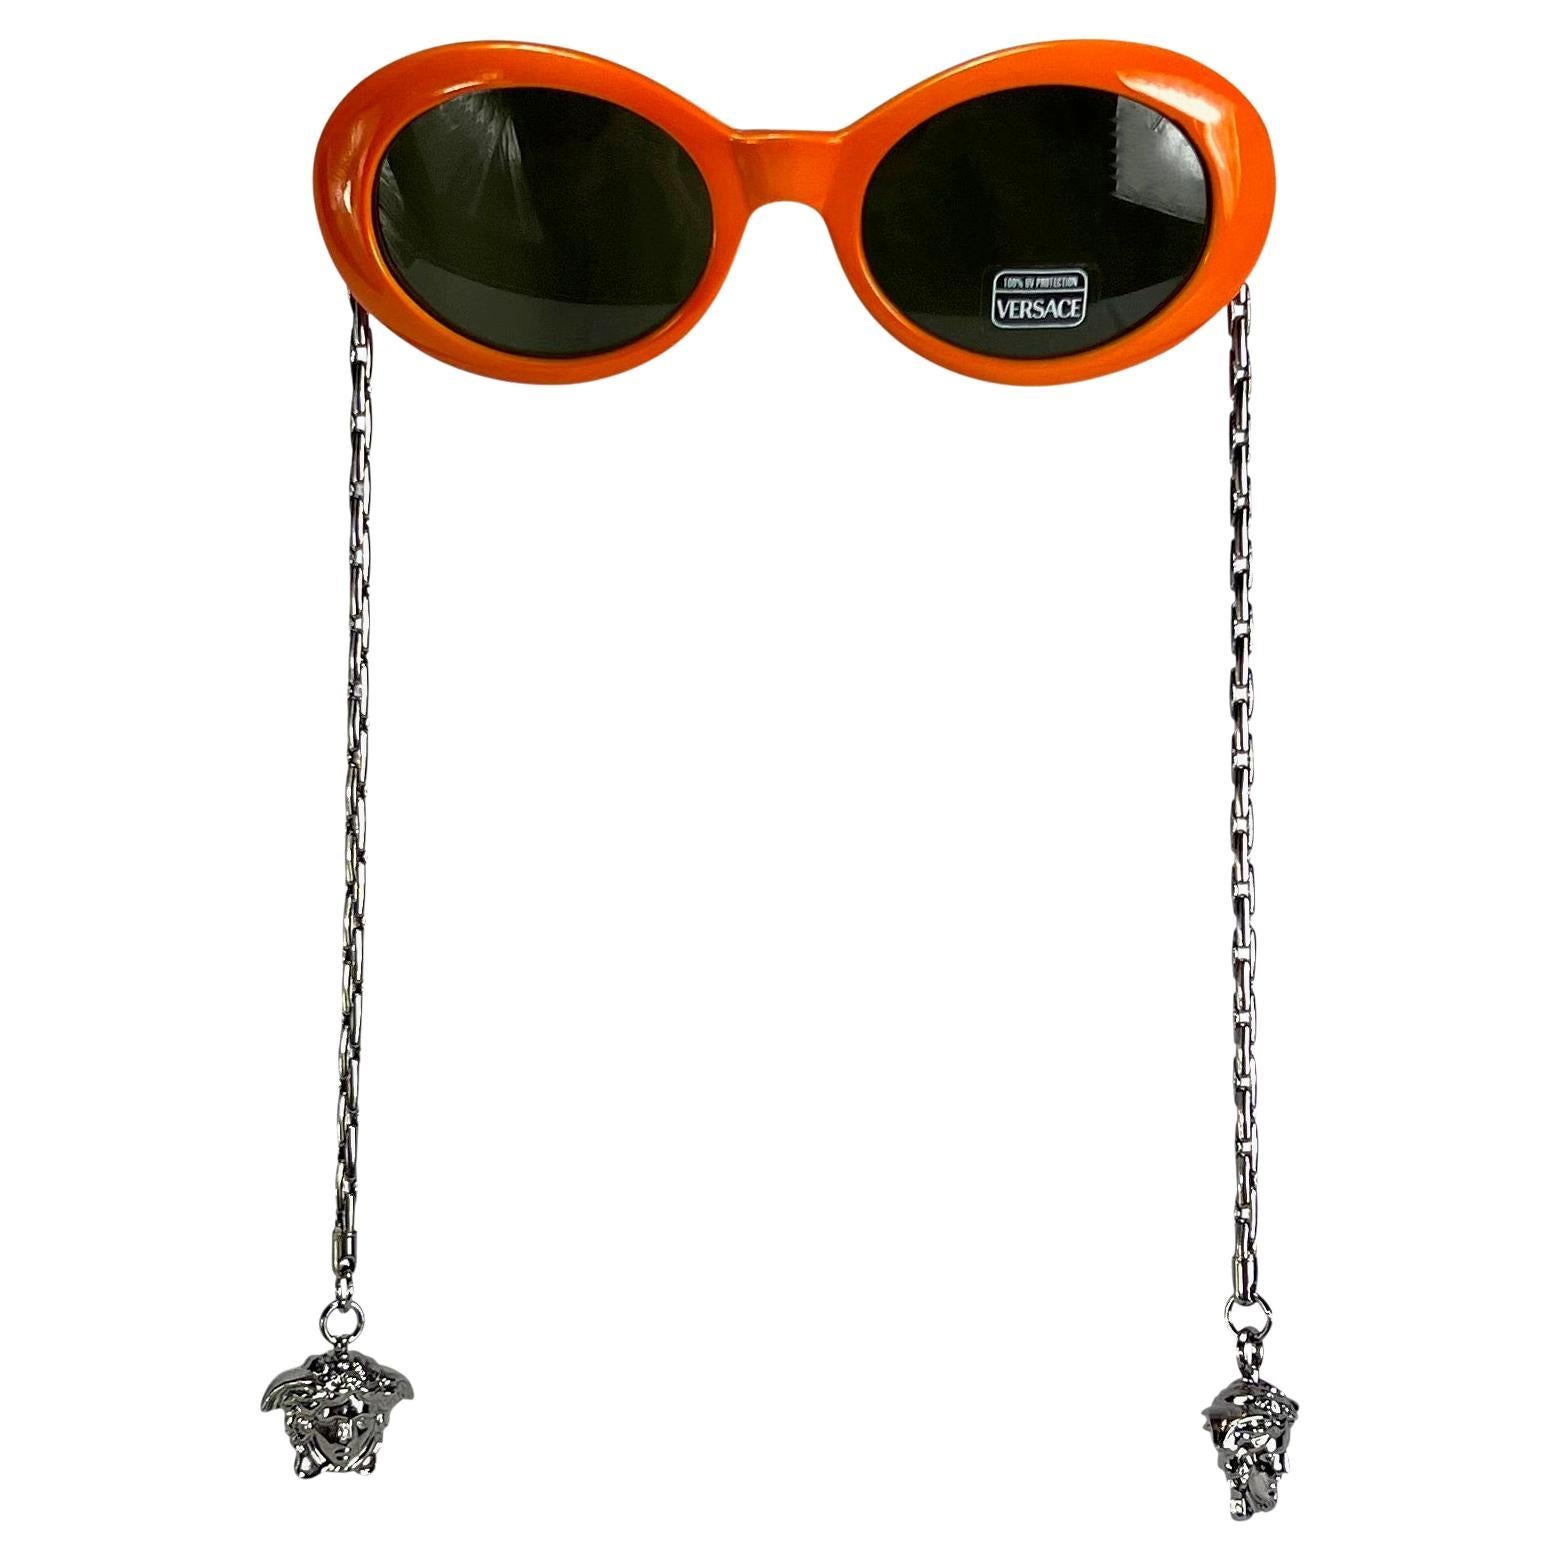 NEU 1996 Gianni Versace Medusa Kette Orange Mod Sonnenbrille